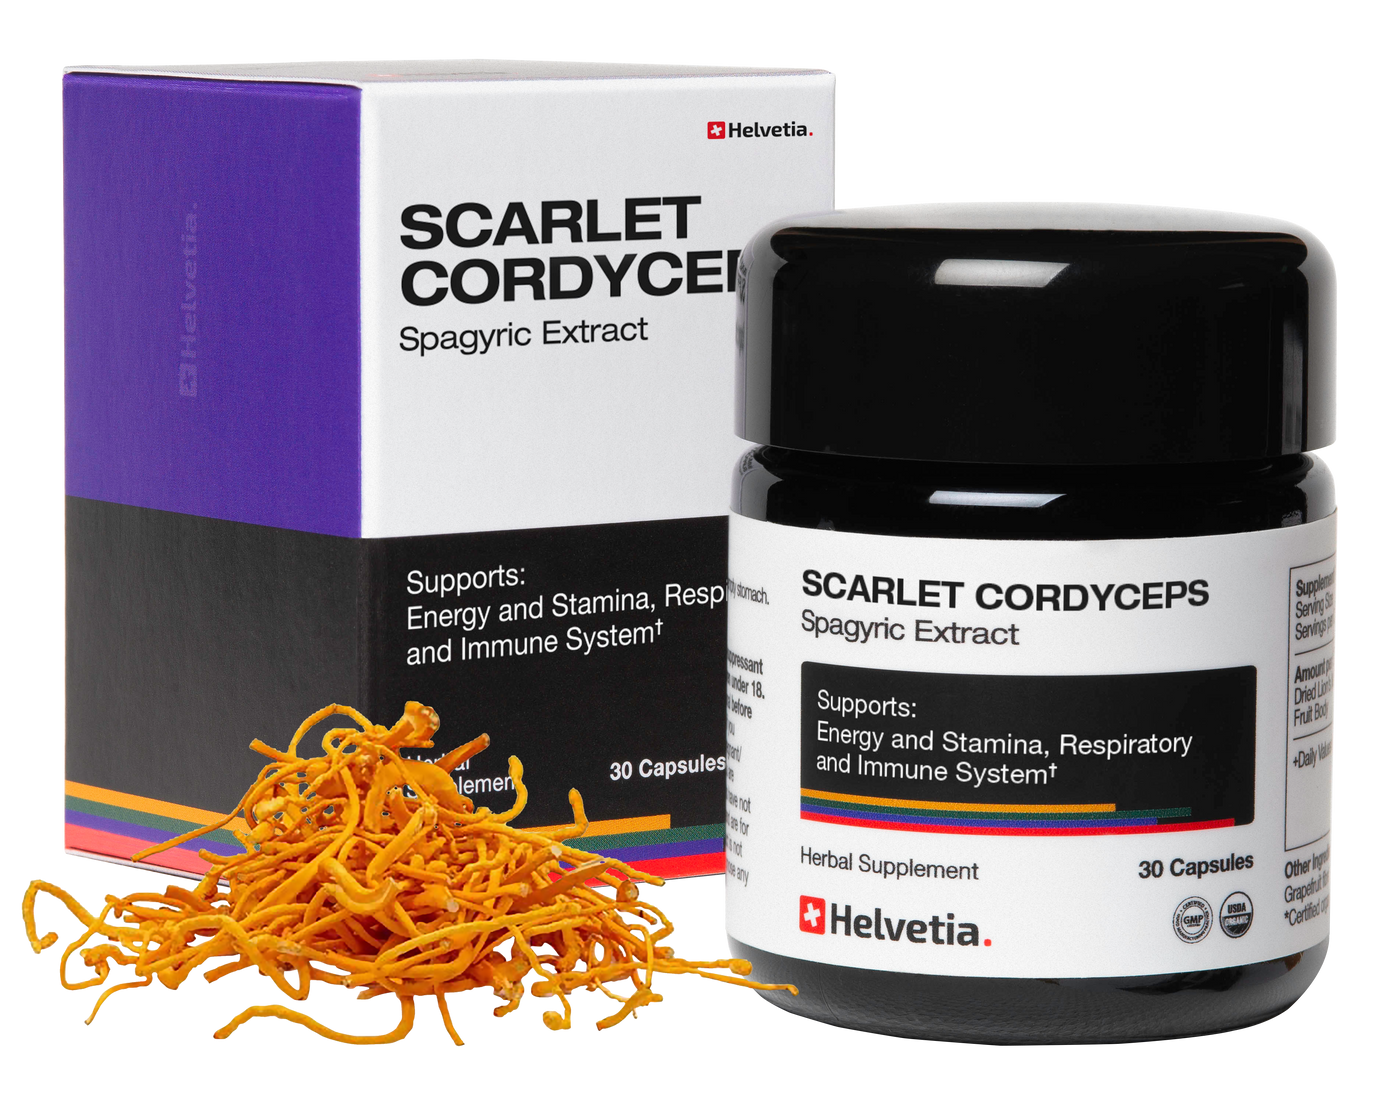 Scarlet Cordyceps Spagyric Extract